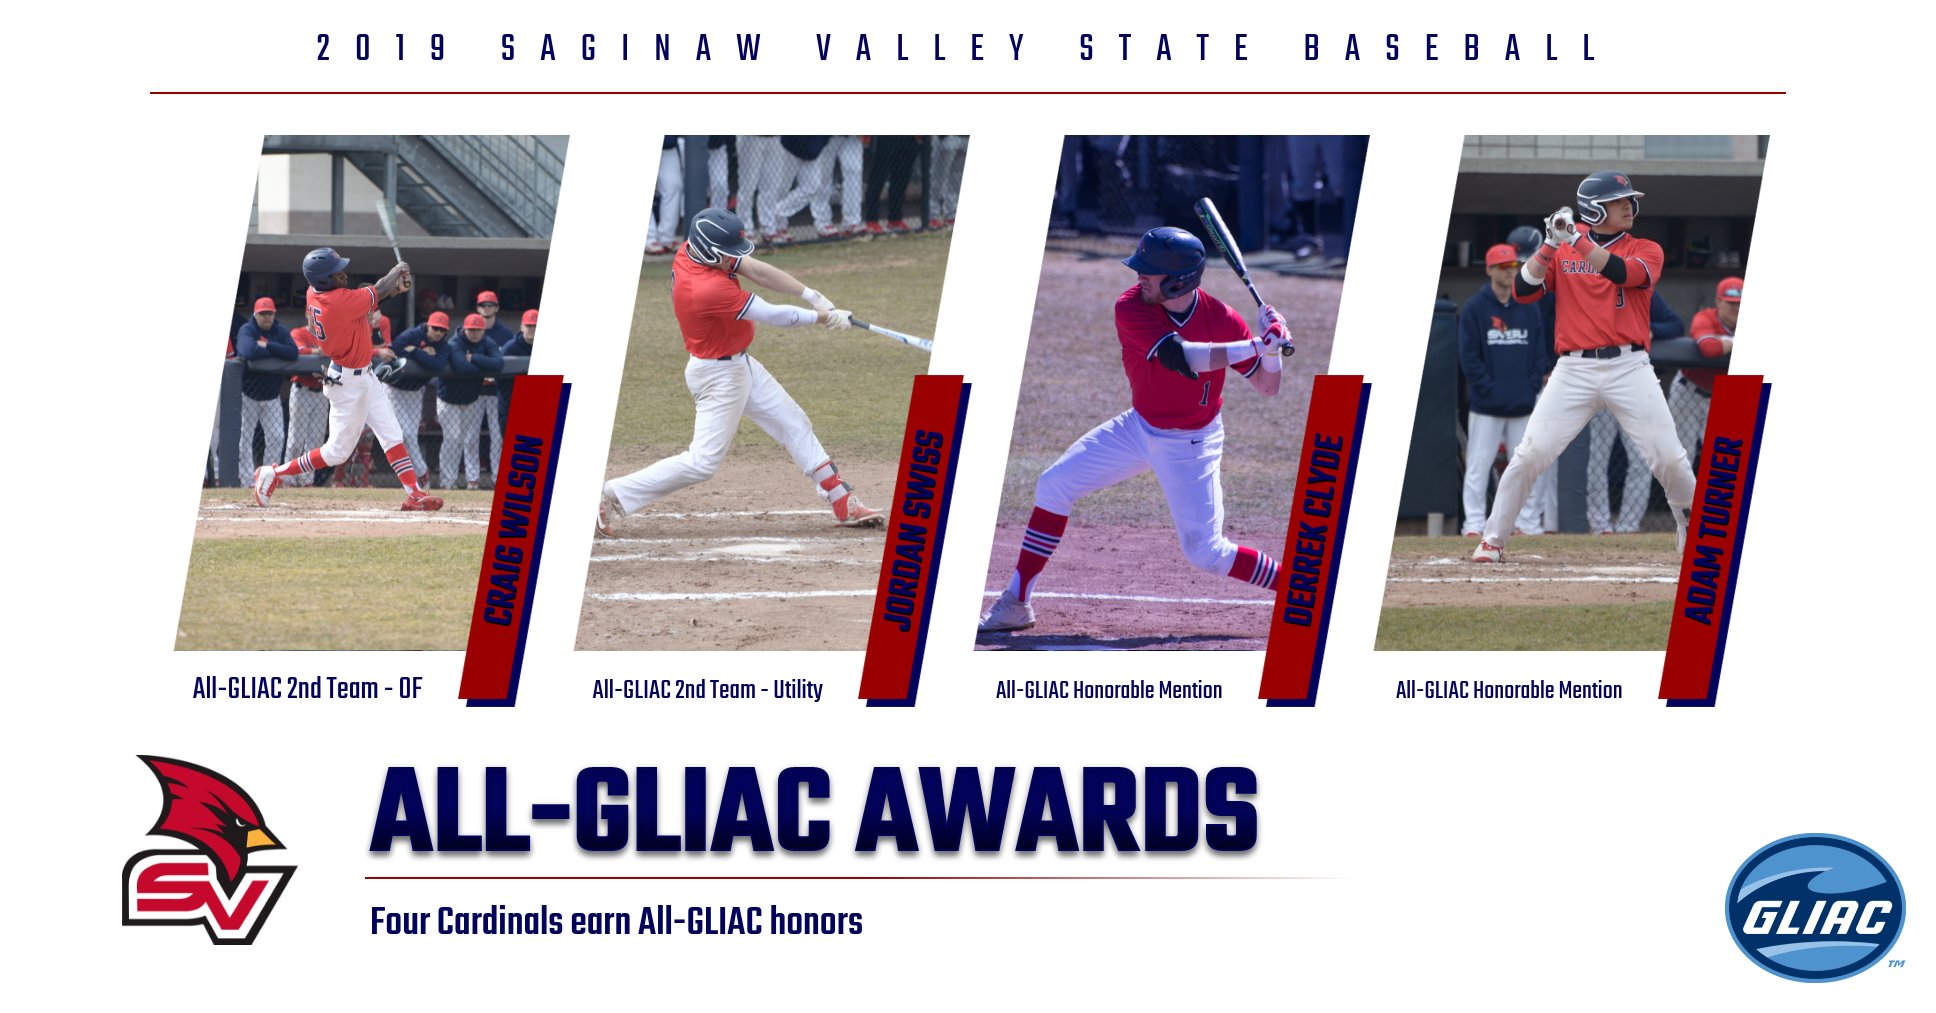 Four Cardinals earn All-GLIAC honors for SVSU Baseball